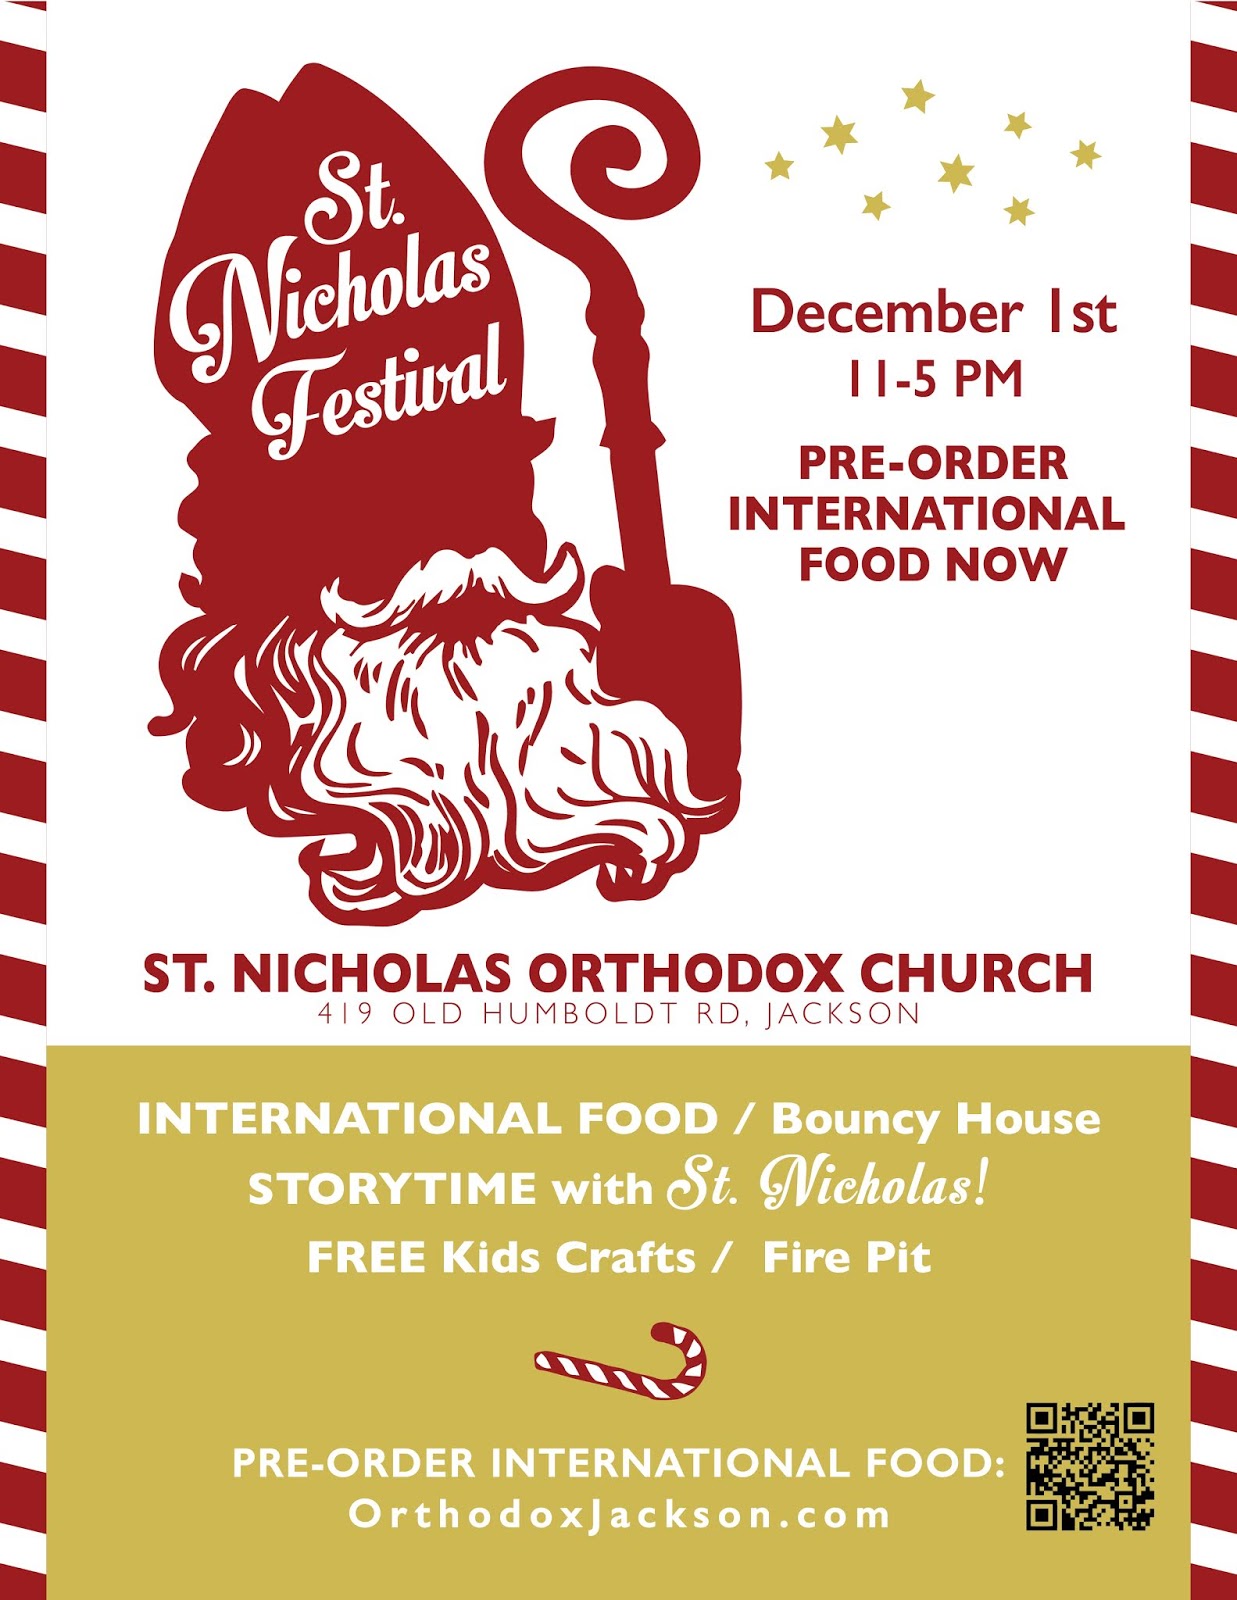 3rd Annual St. Nicholas Festival!